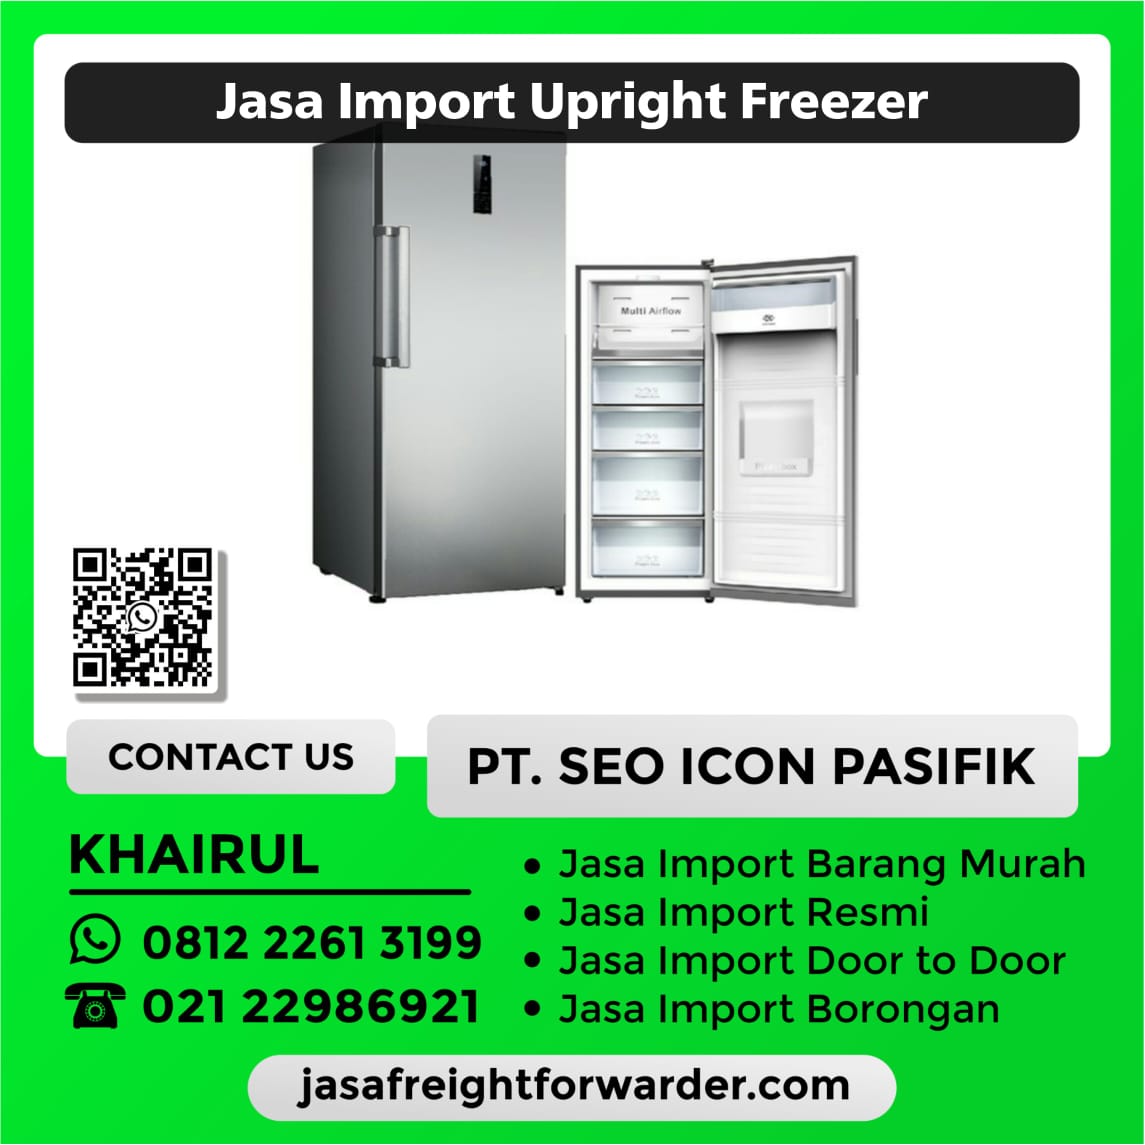 Jasa-Import-Upright-Freezer.jpeg